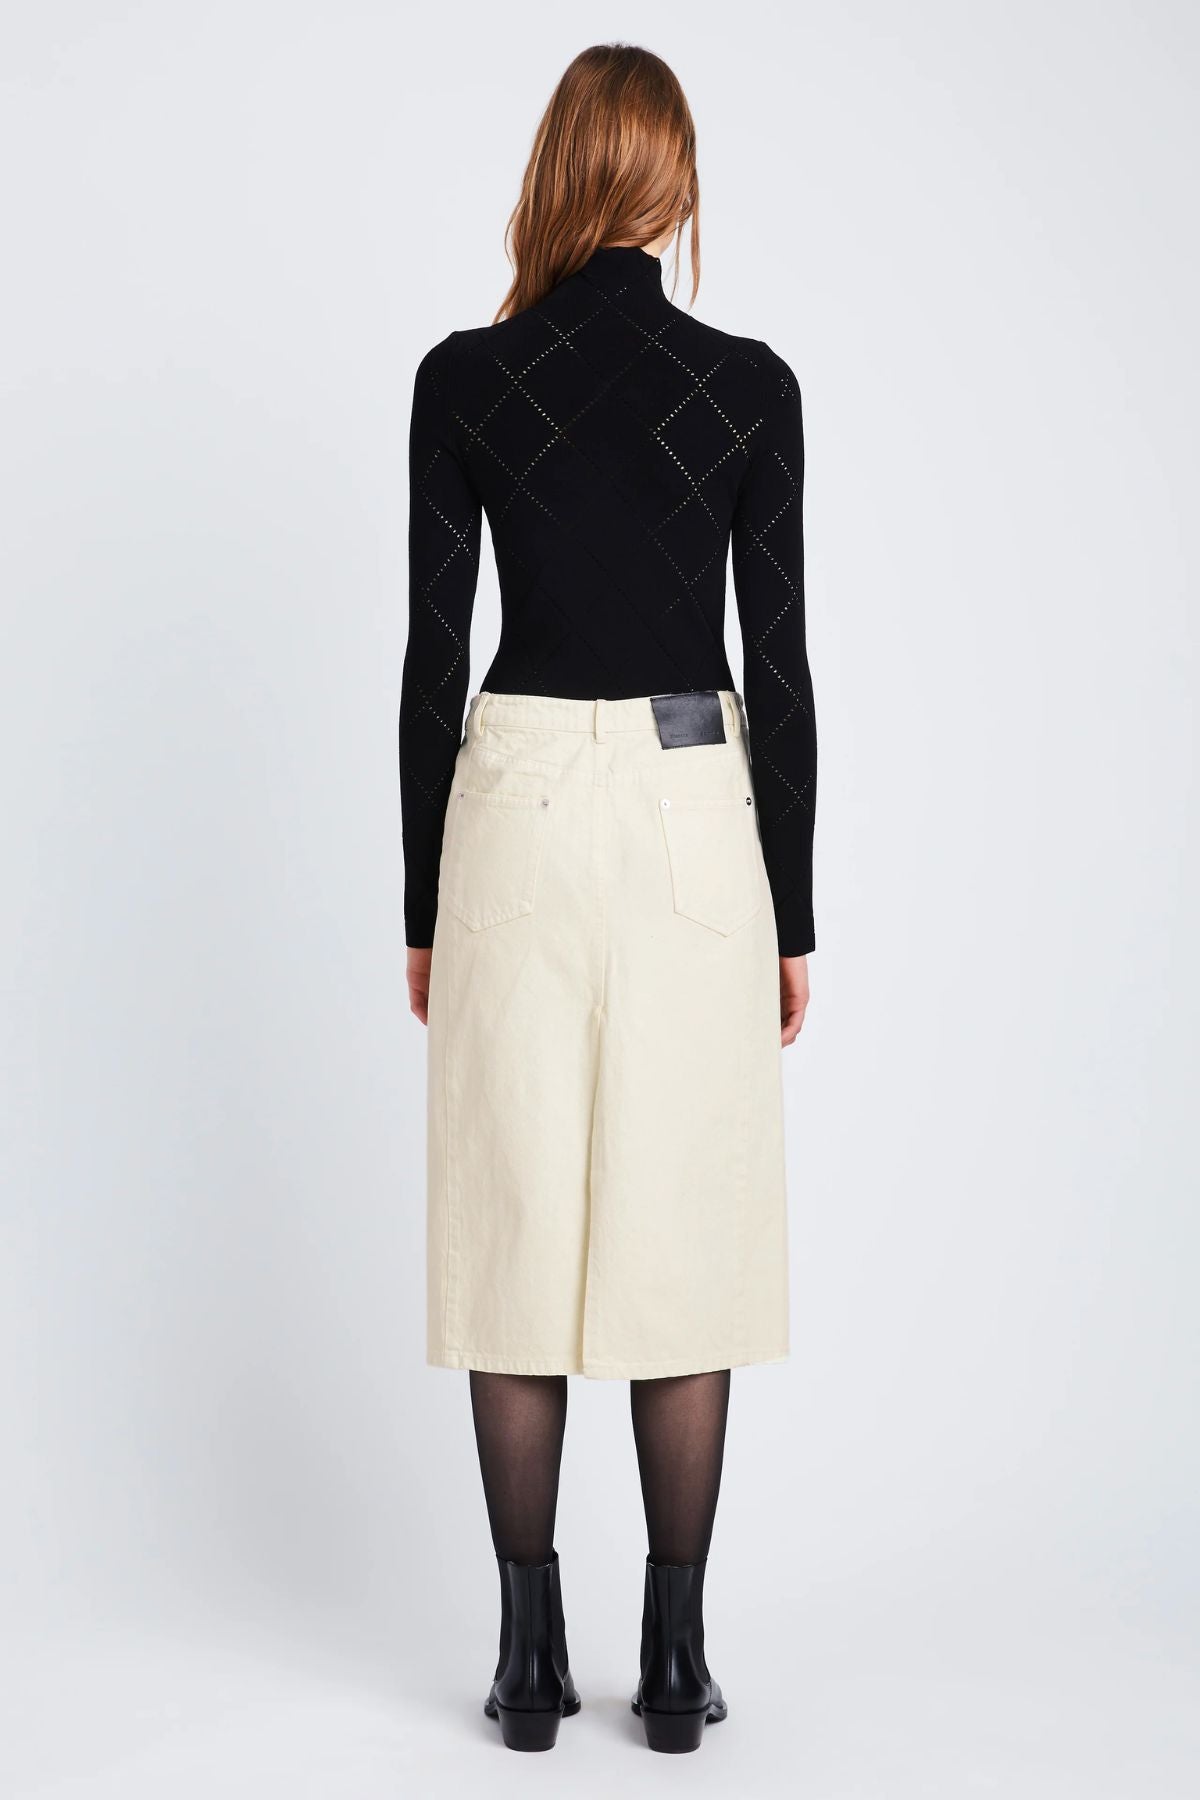 Proenza Schouler White Label Sloan Skirt - Parchment